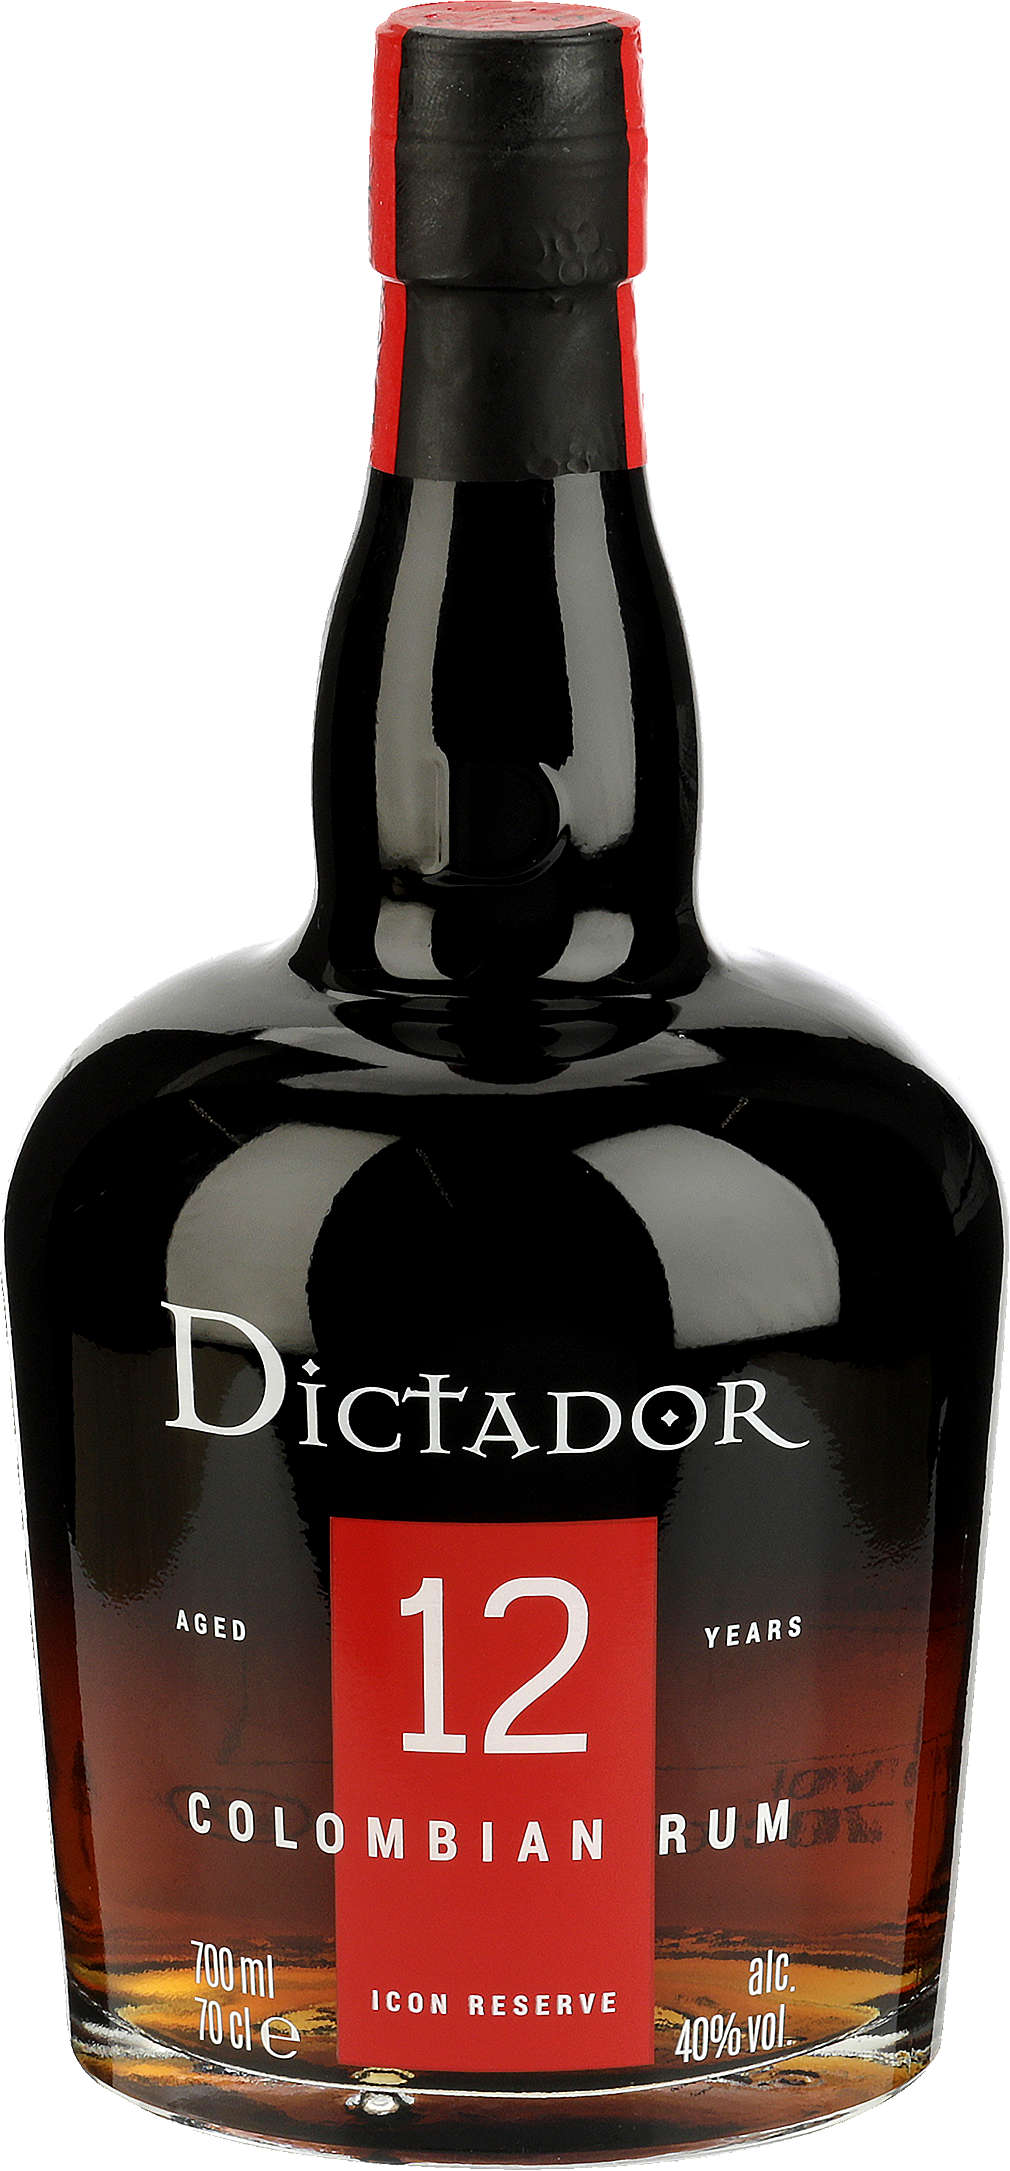 Zobrazit nabídku Dictador 12Y Icon Reserve Rum